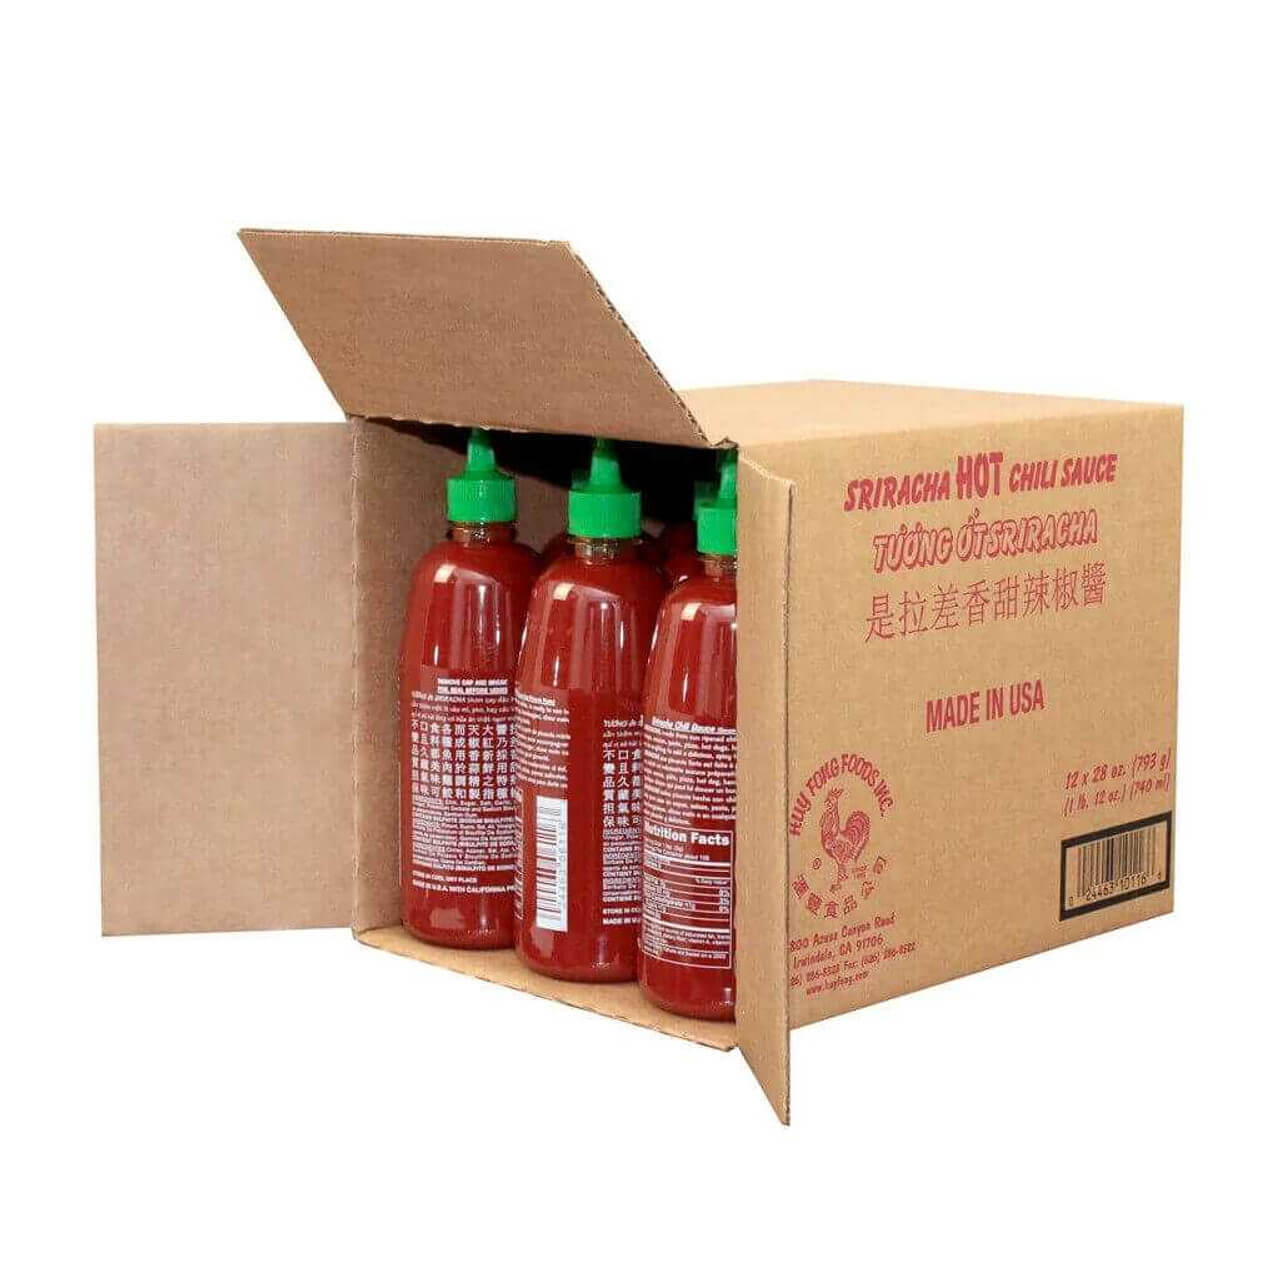 Huy Fong Sriracha Hot Chili Sauce 28oz. bottle, (12/Case) - Best before food